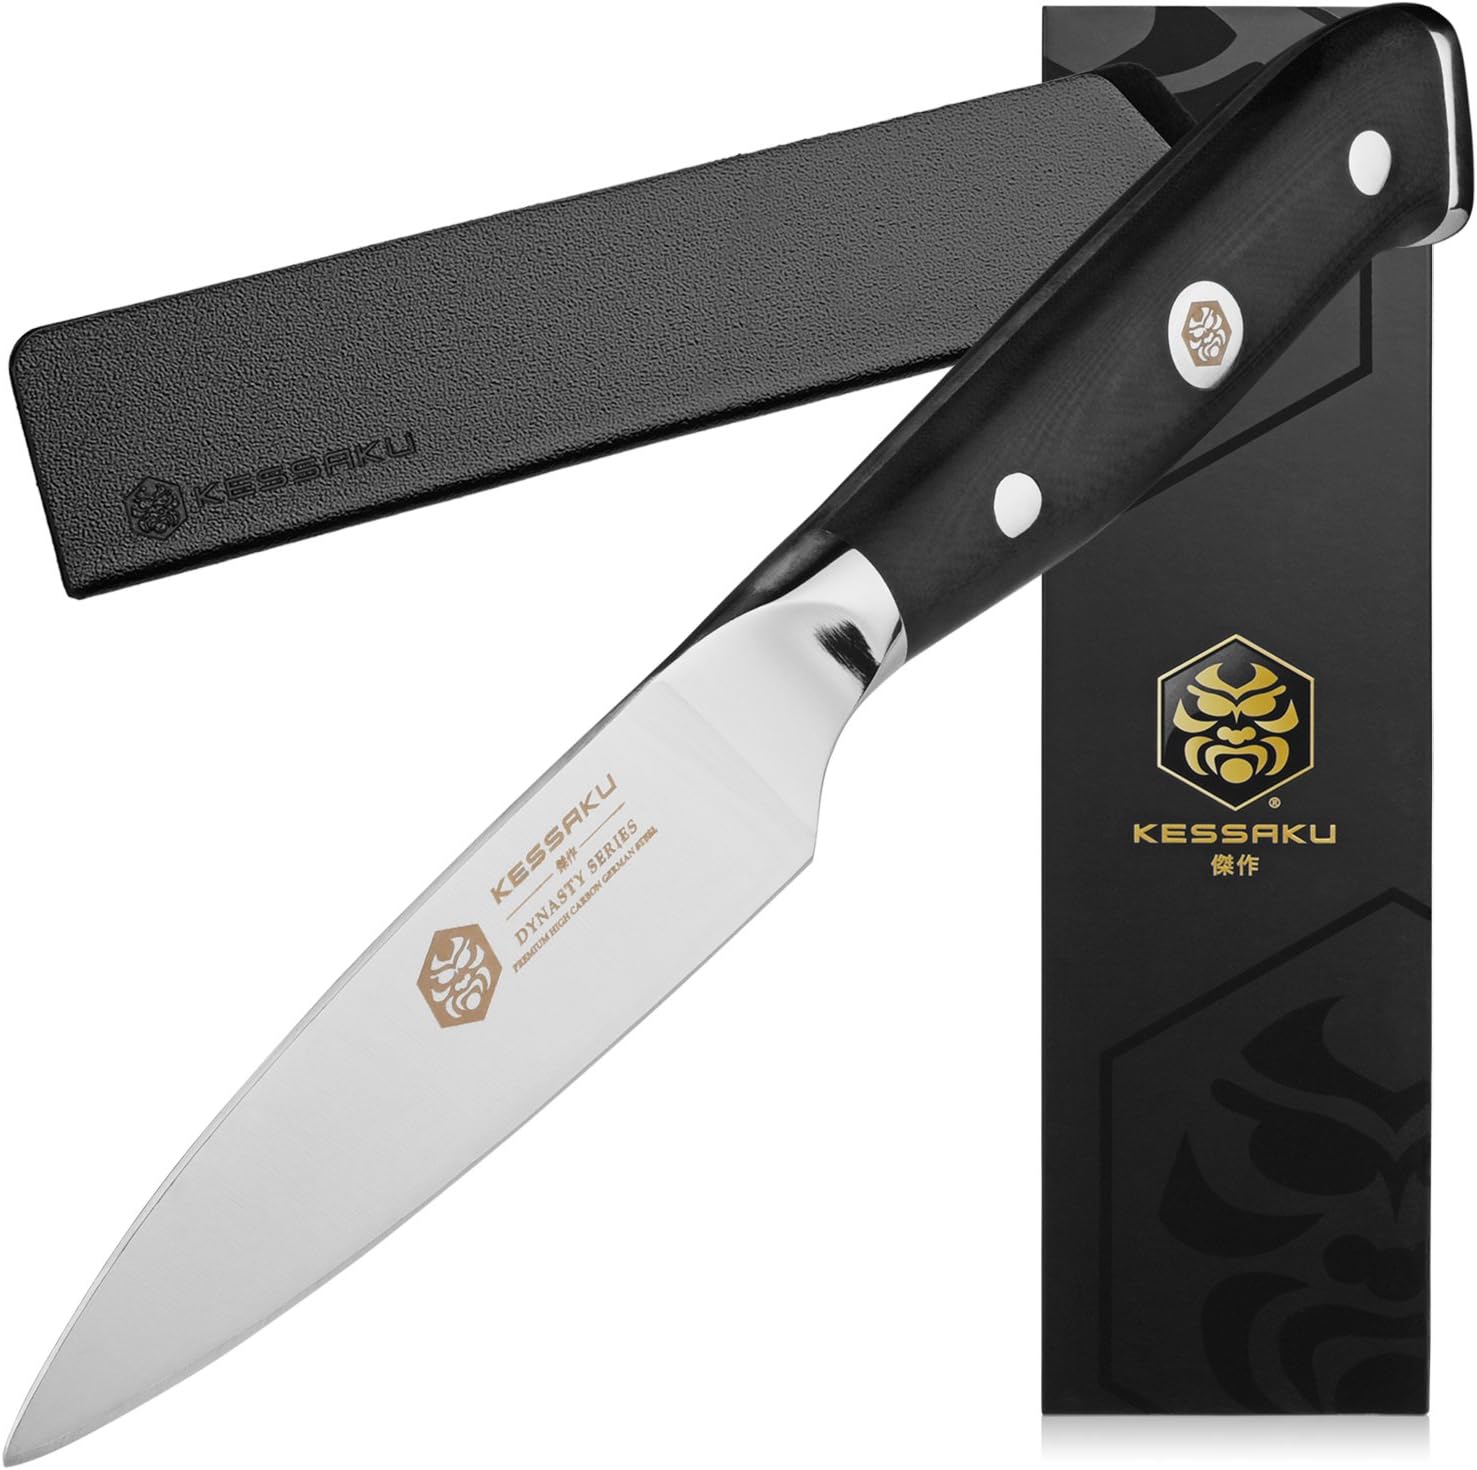 KESSAKU Utility Knife - 5 inch - Dynasty Series - Razor Sharp Kitchen Knife - Forged ThyssenKrupp German High Carbon Stainless Steel - G10 Garolite Handle with Blade Guard